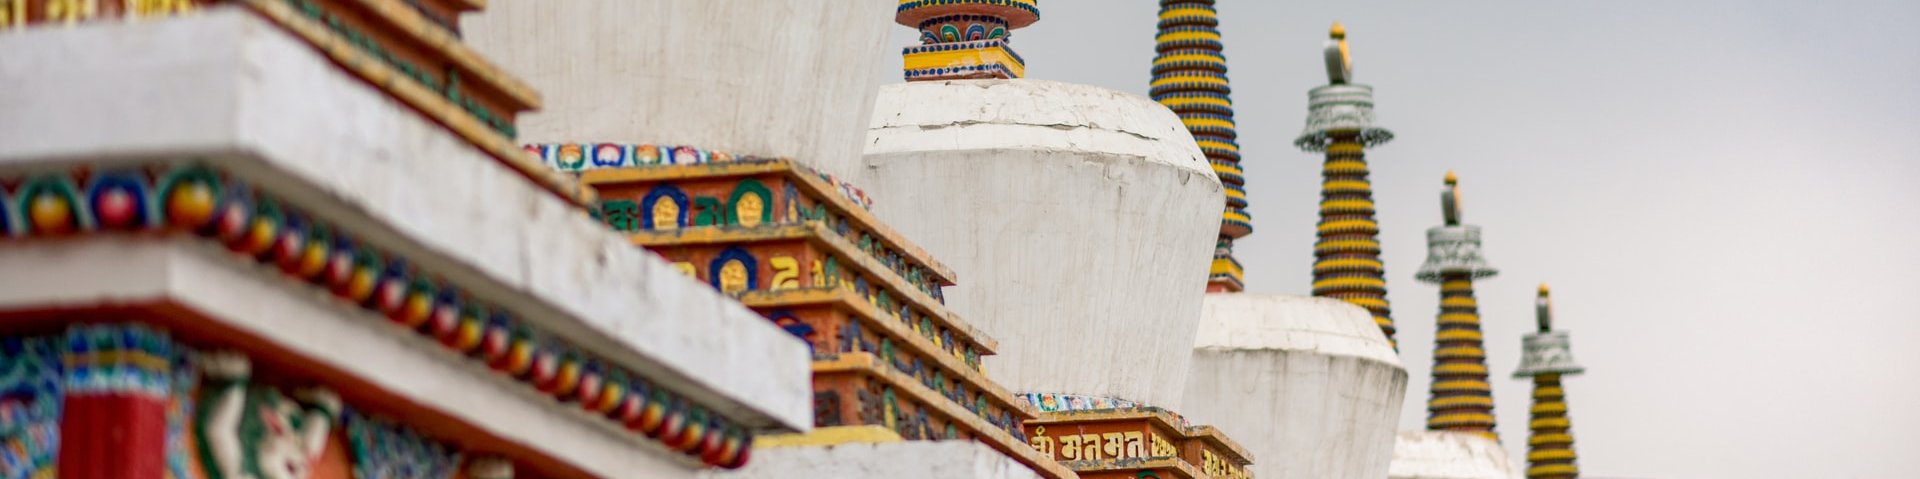 Nahaufnahme des Kumbum-Klosters in Tibet